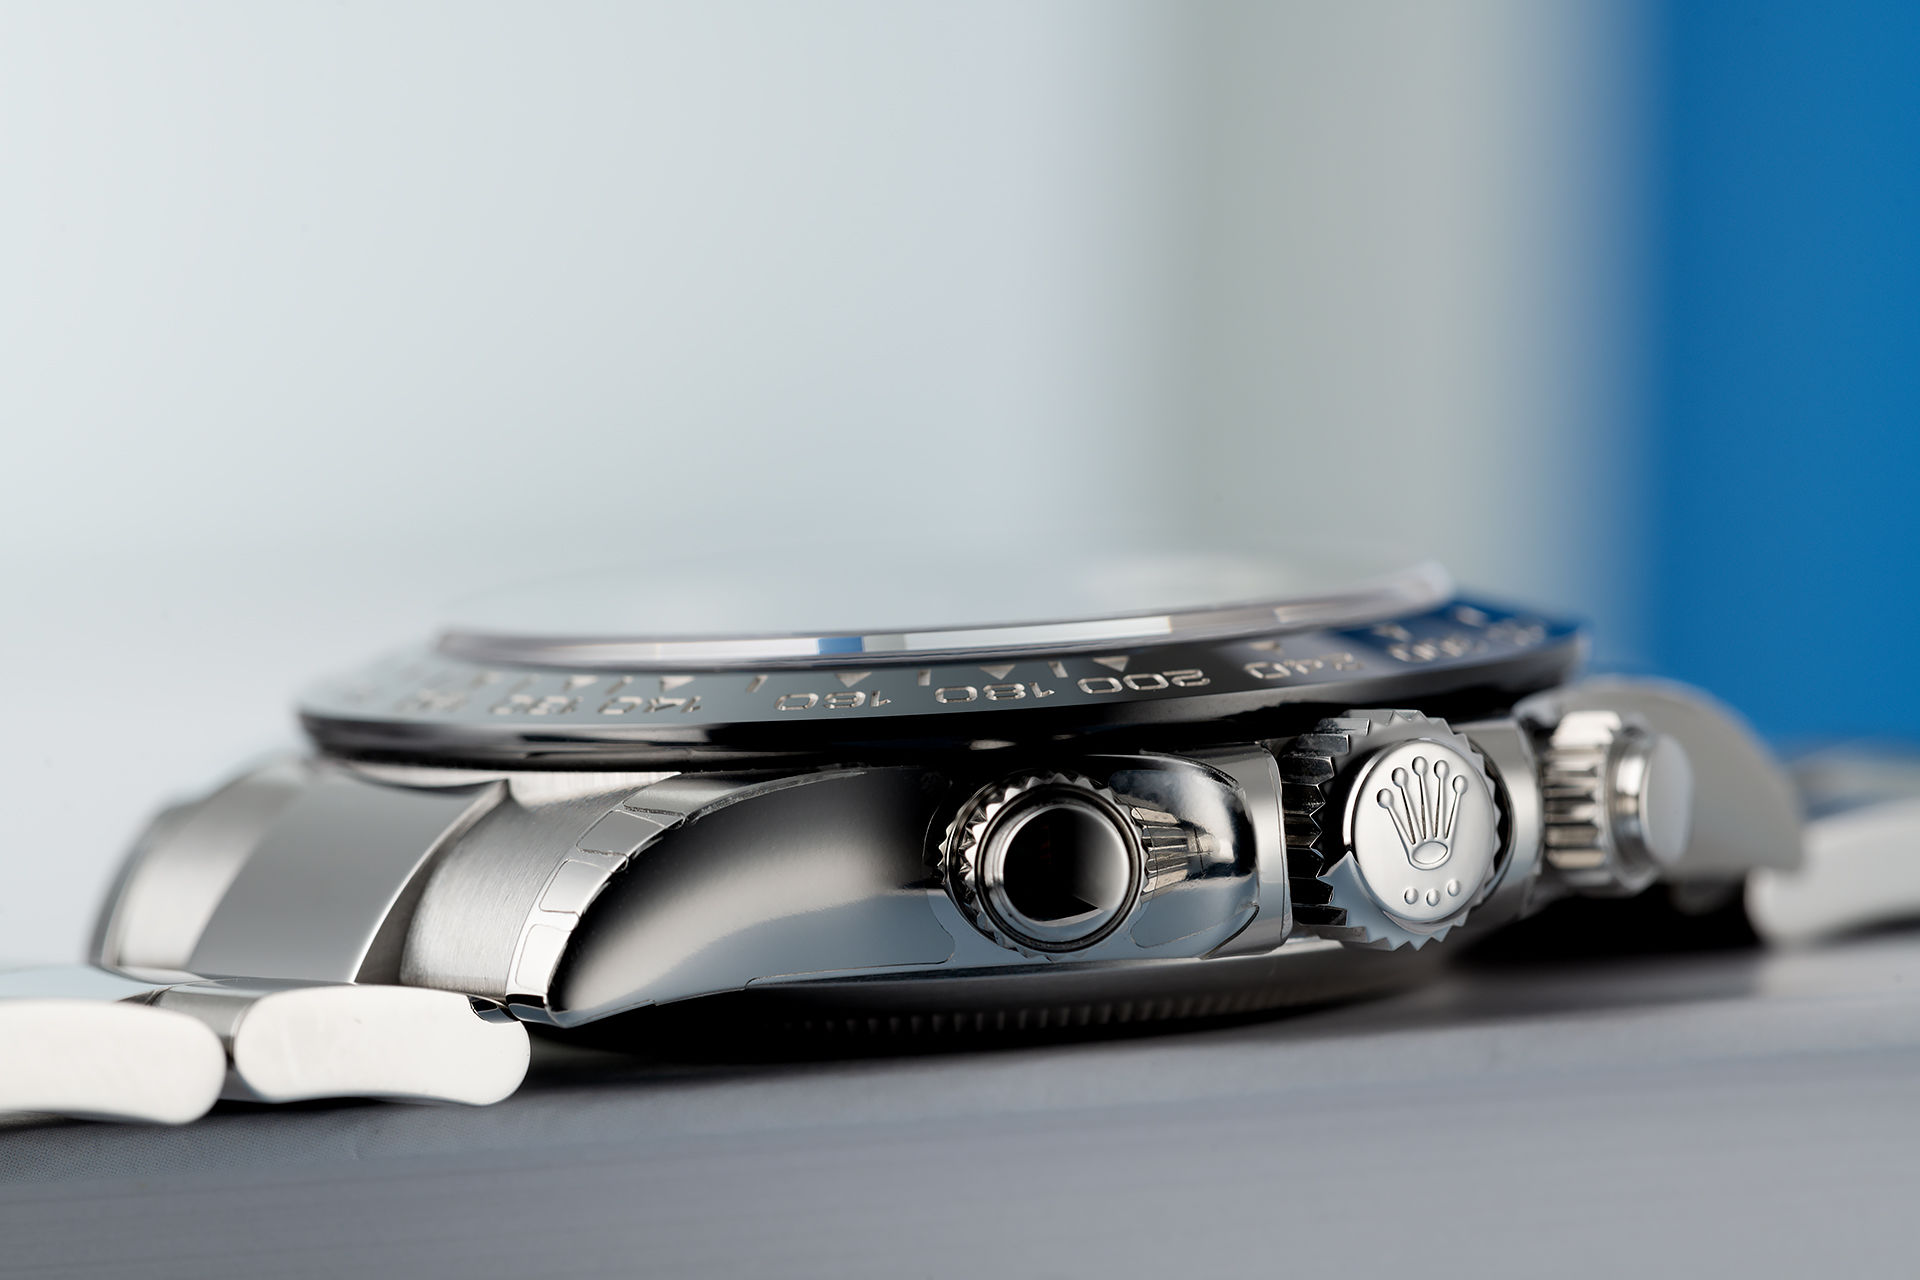 ref 116500LN | 'Rolex International Warranty to 2025' | Rolex Cosmograph Daytona